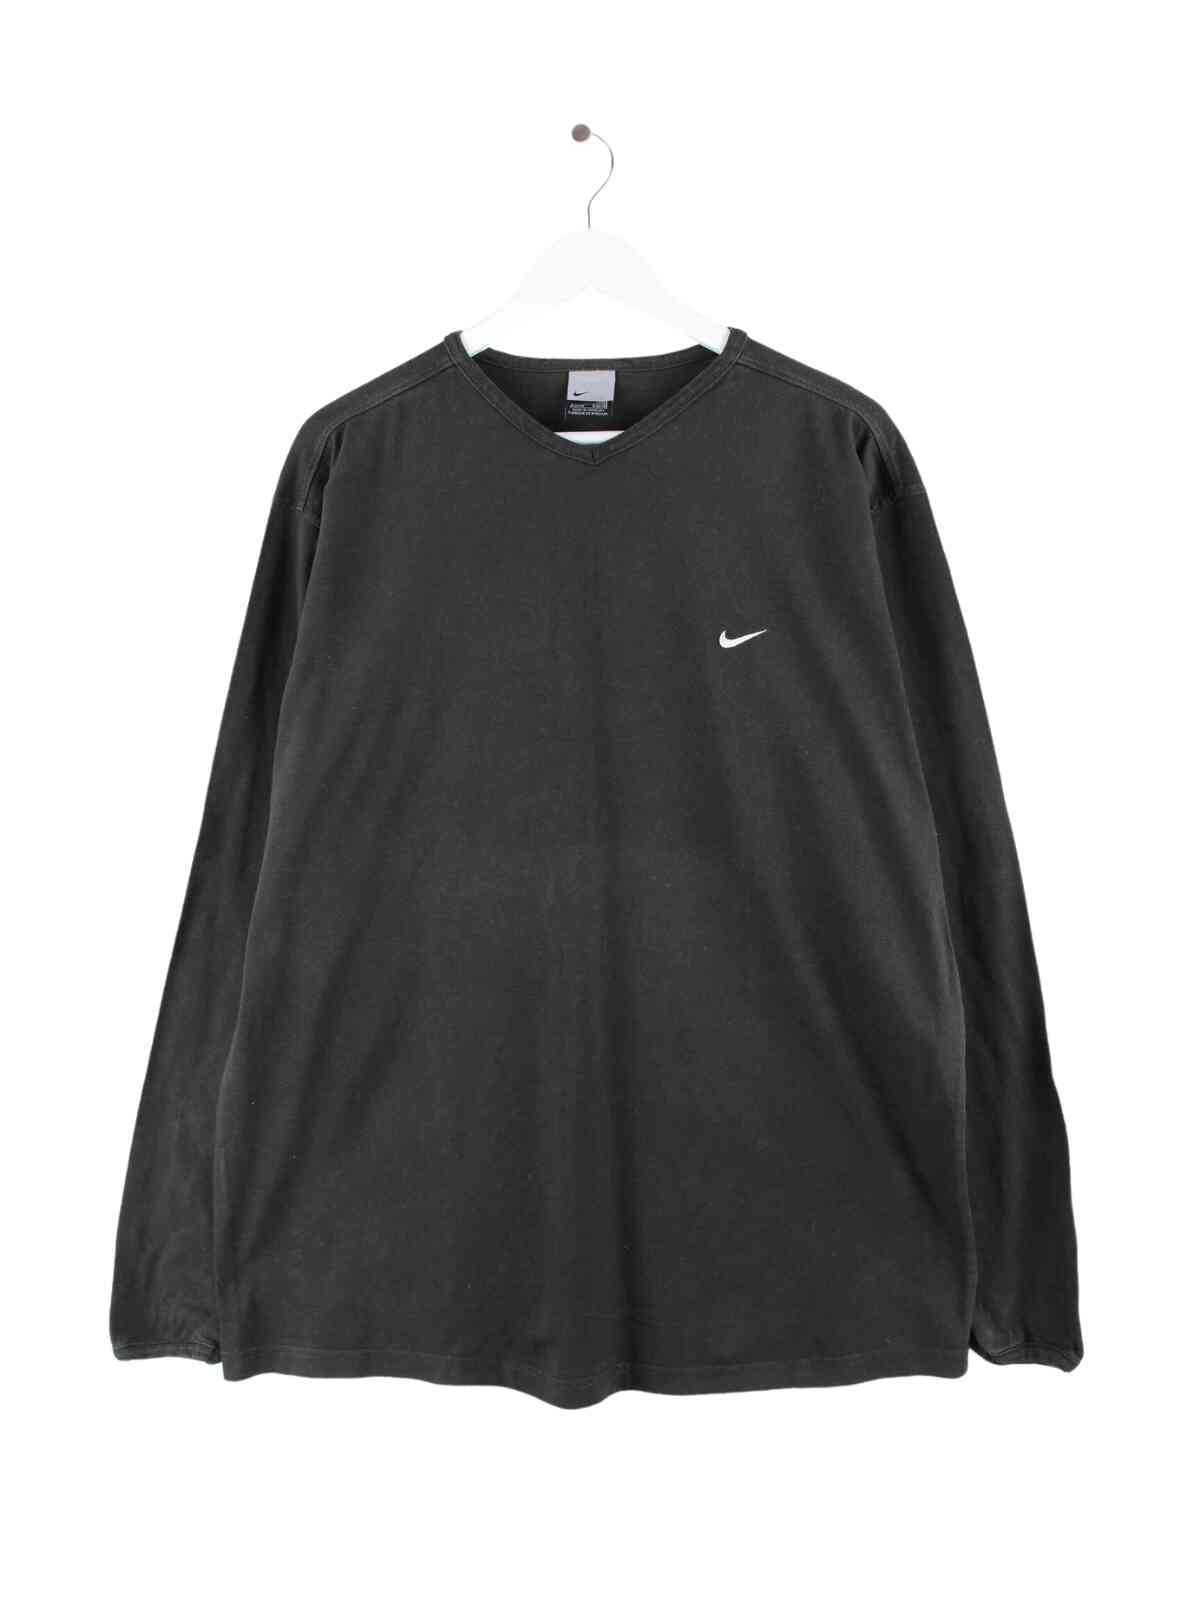 Nike Basic Sweatshirt Schwarz XL